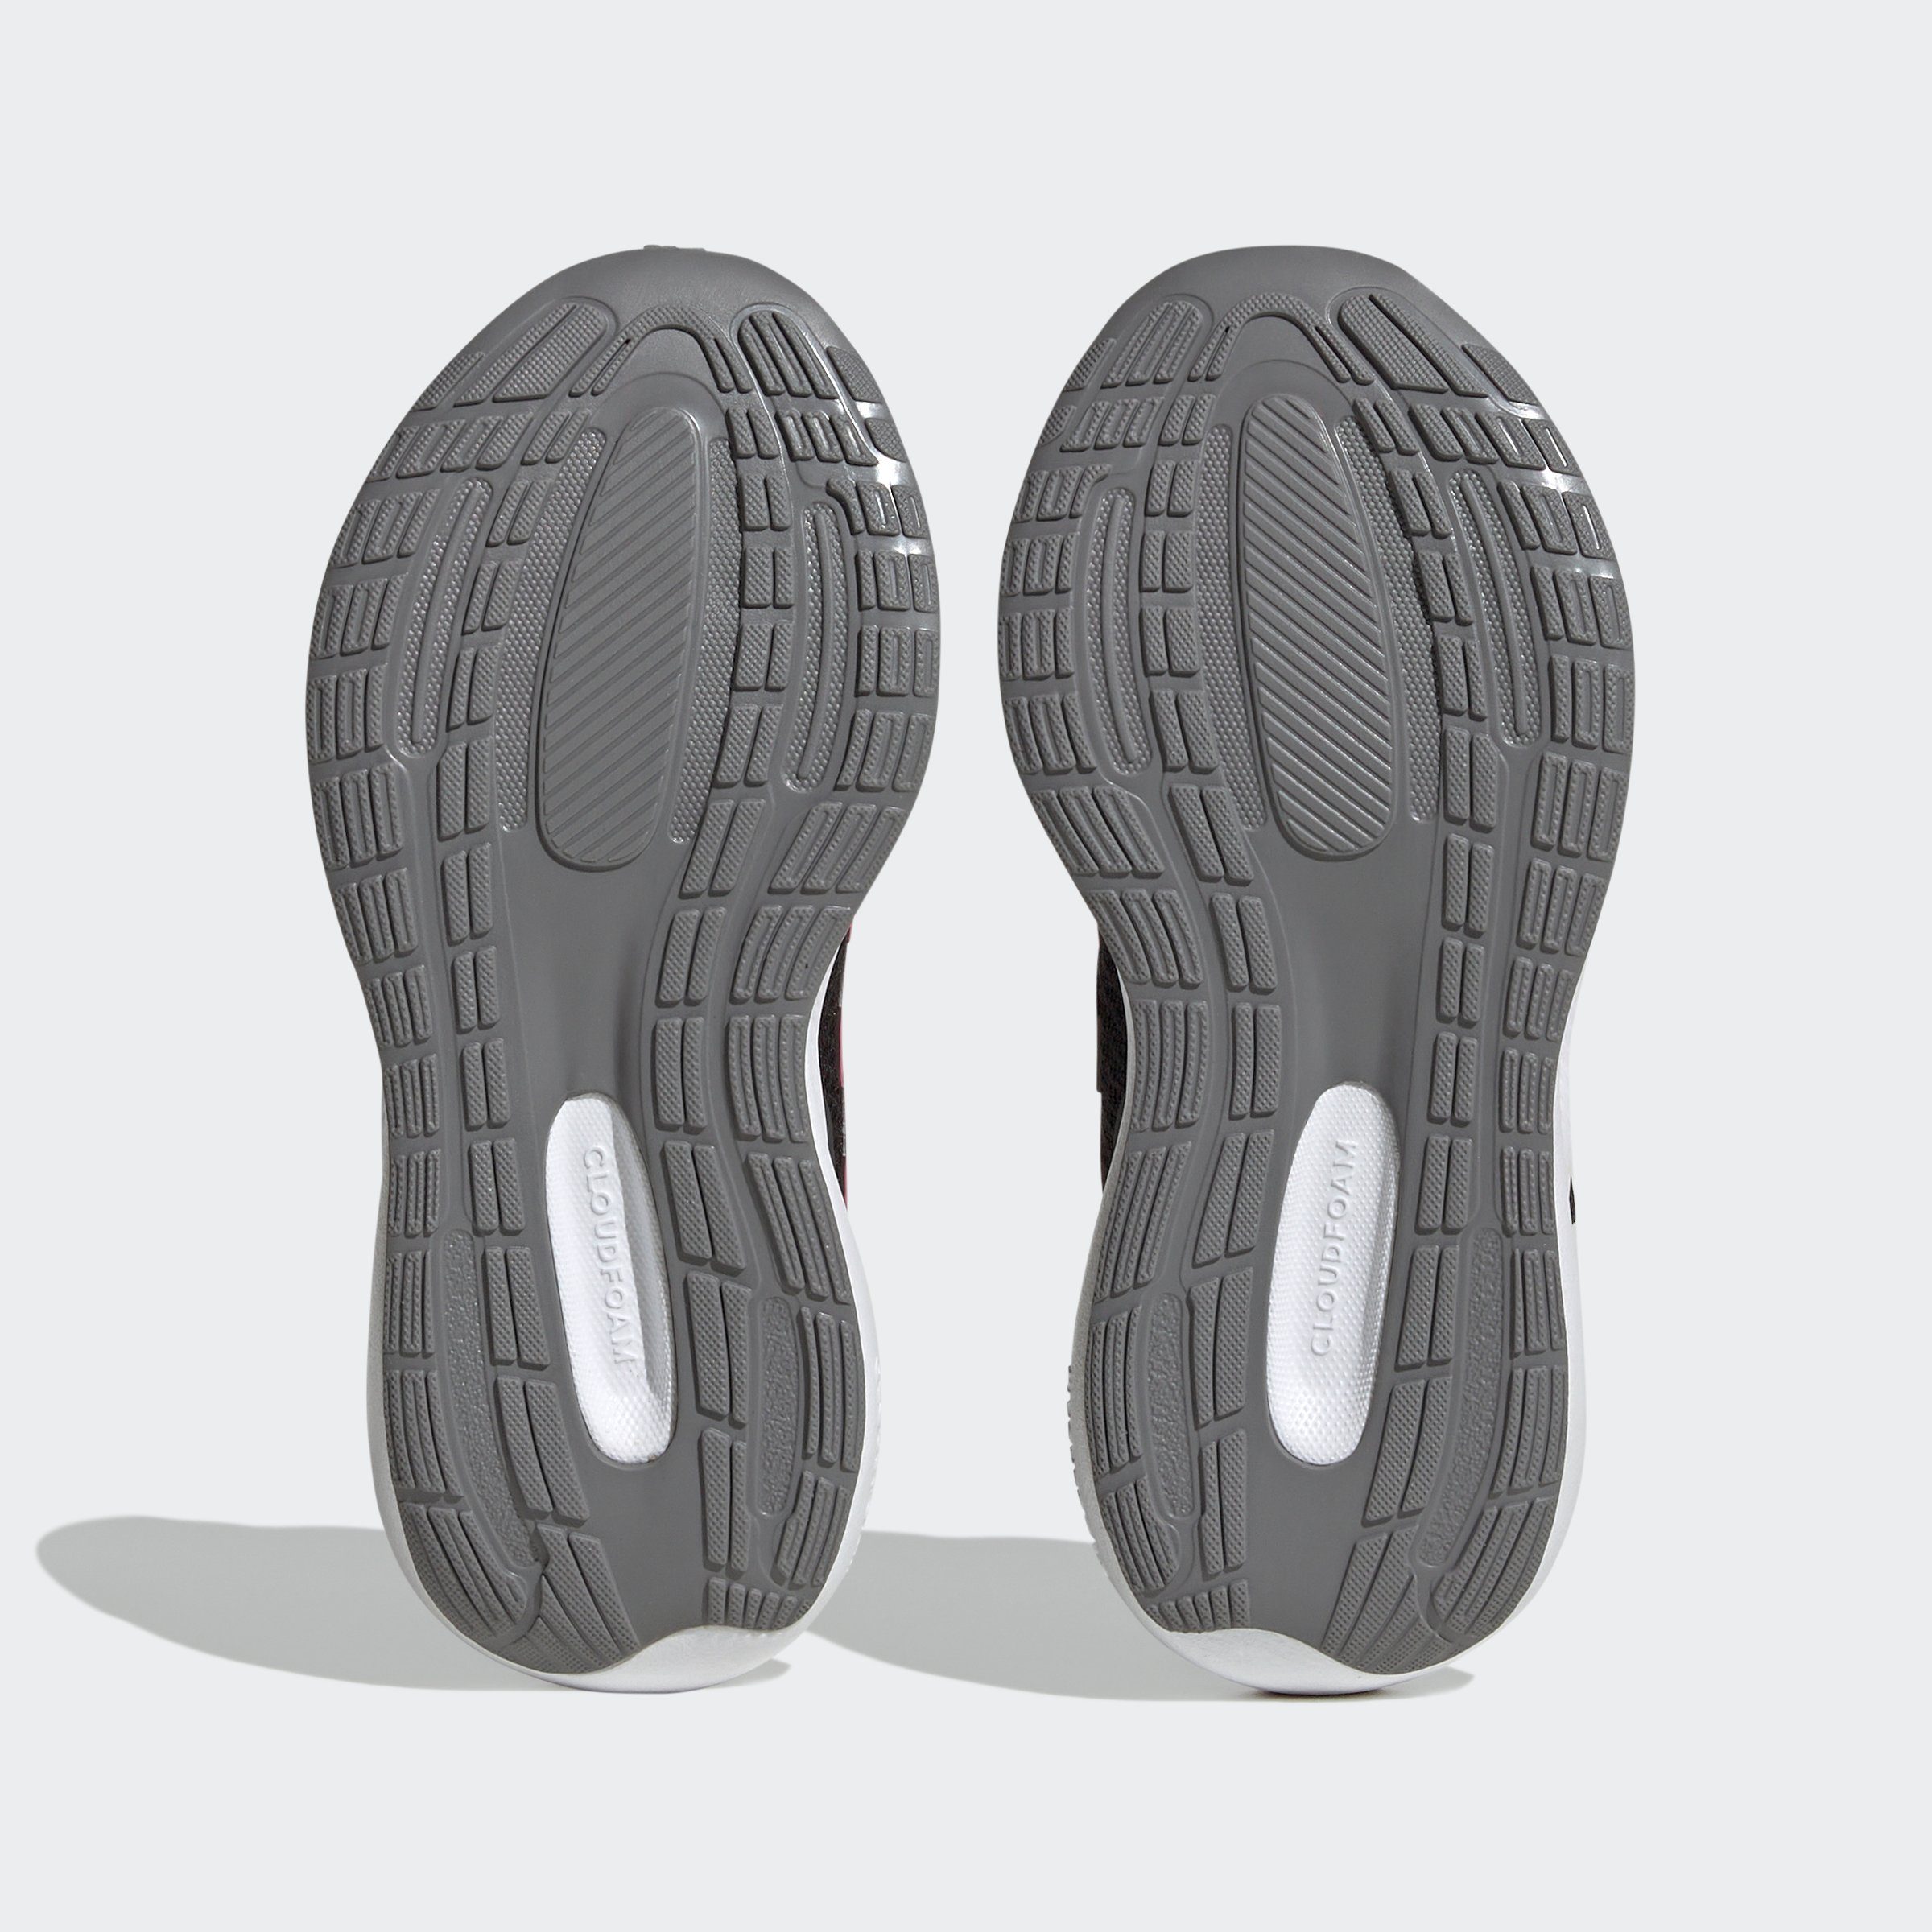 LACE RUNFALCON cblack TOP ELASTIC Sportswear Sneaker 3.0 STRAP adidas